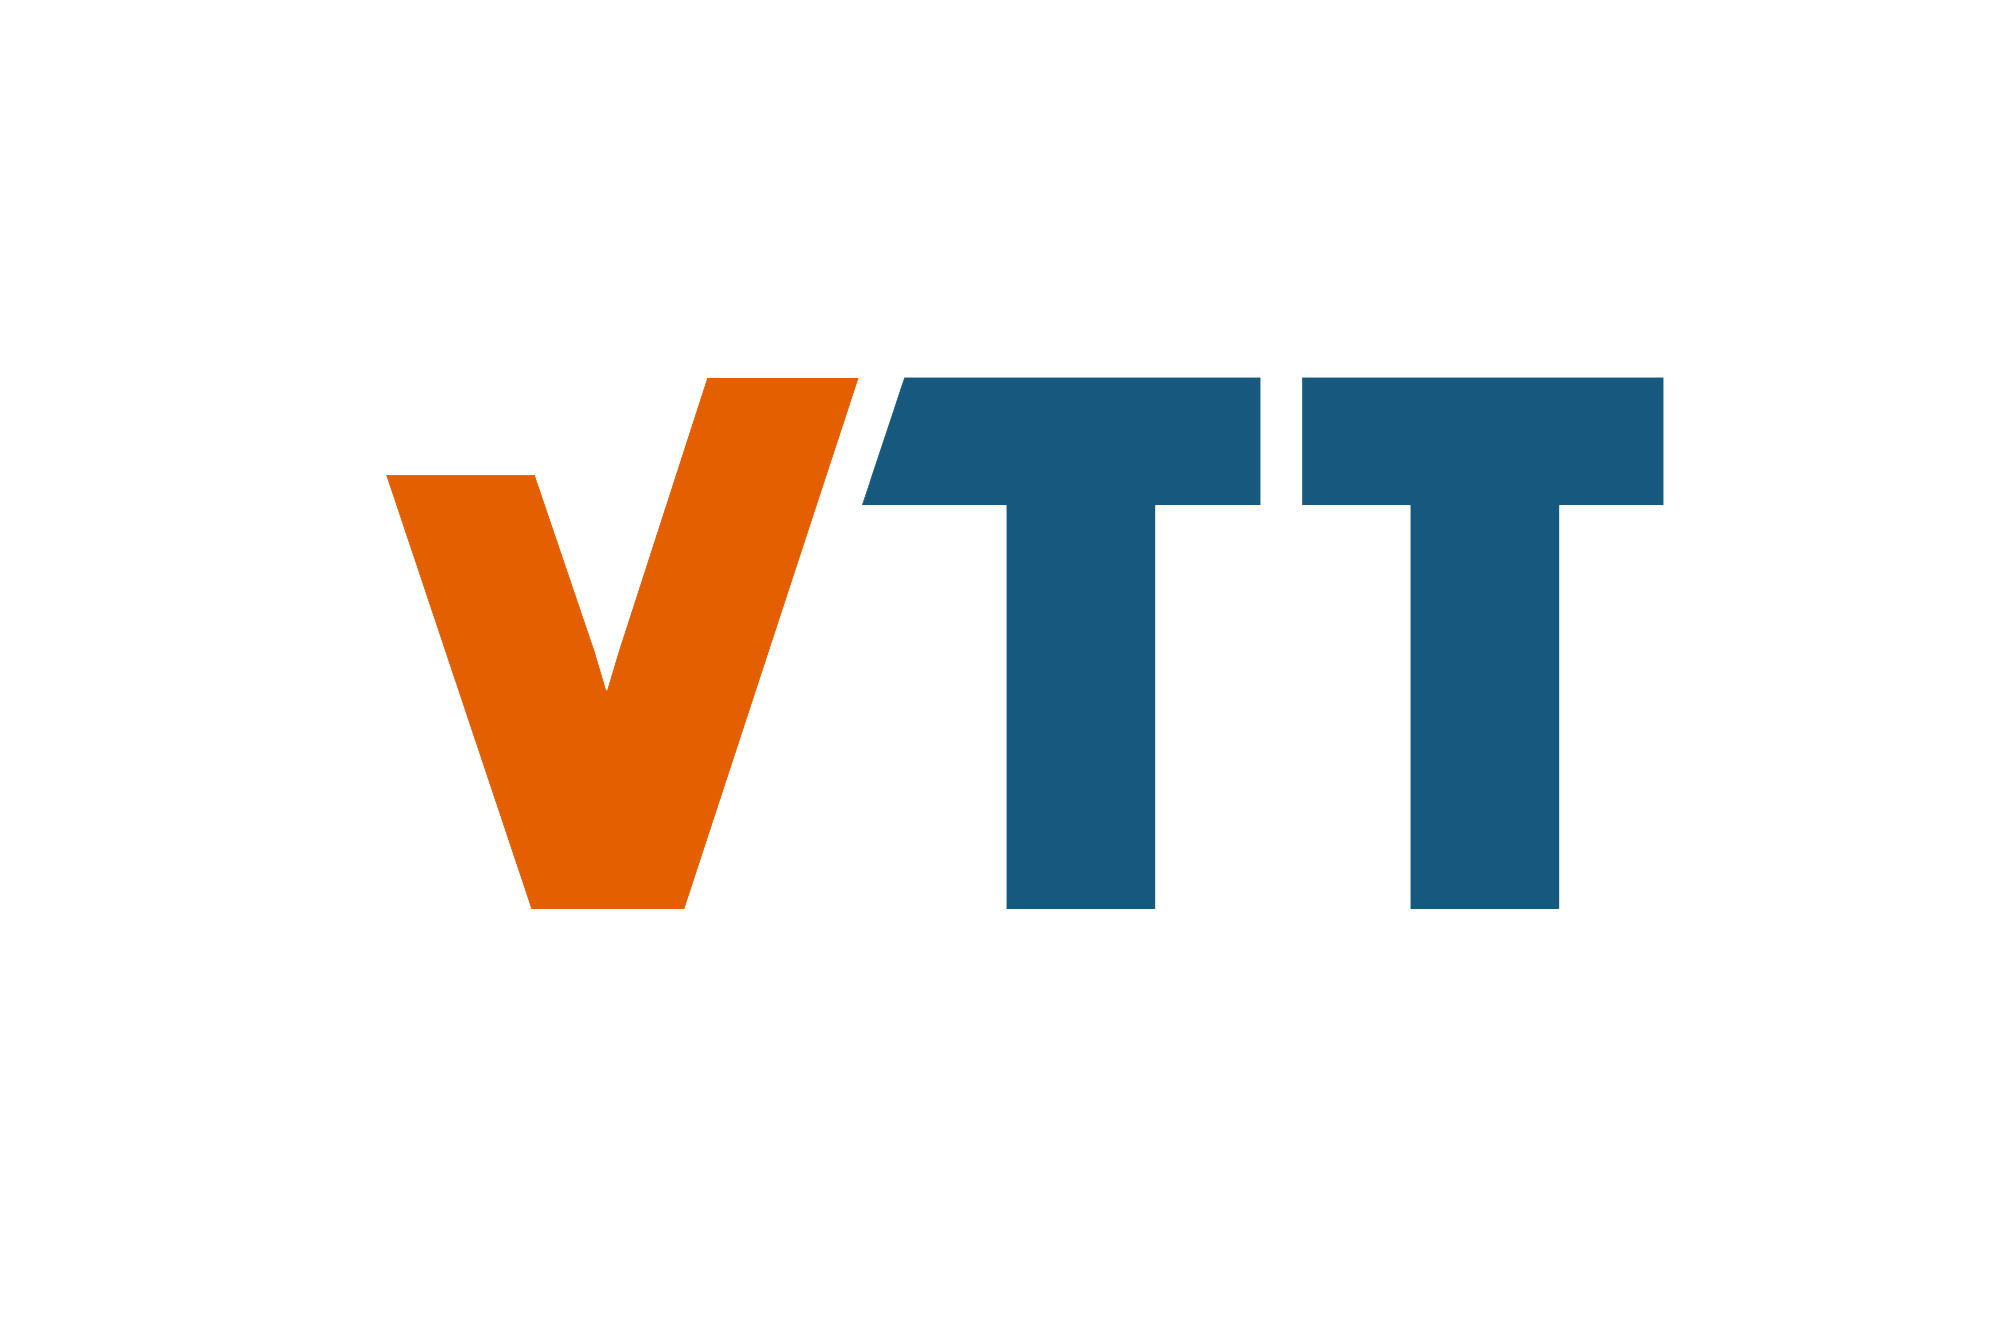 VTT, Technical Research Centre of Finland